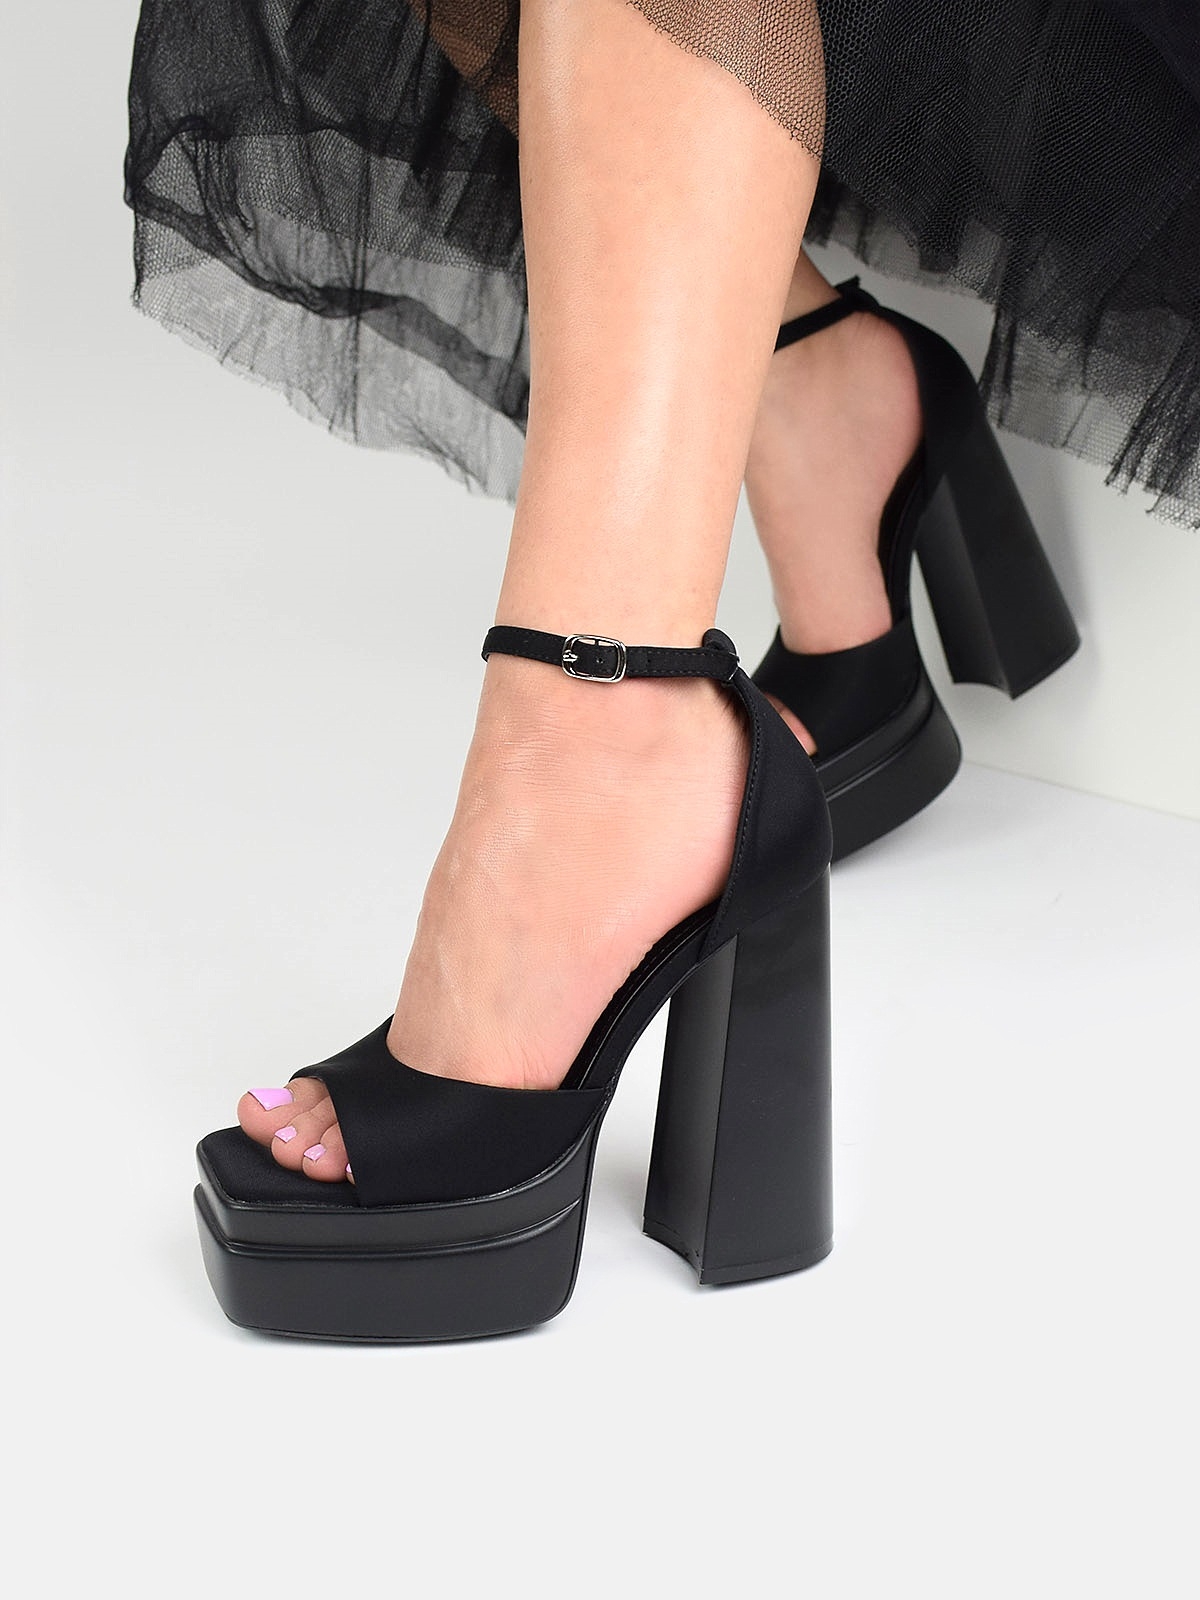 Exclusive design high heeled platform sandals in black